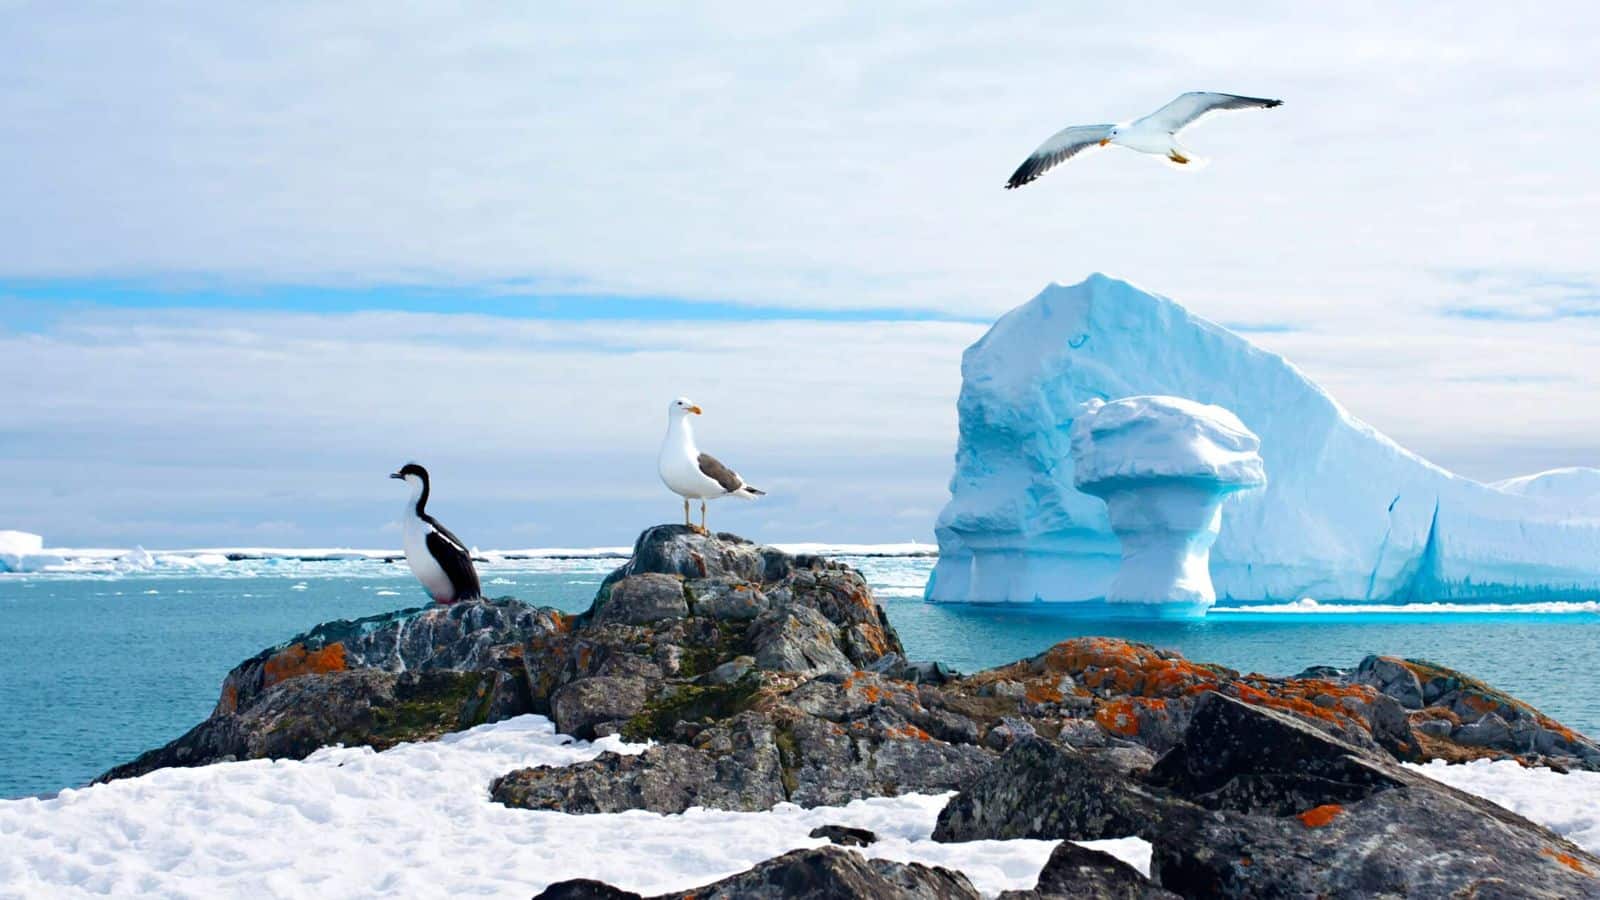 Antarctic expedition cruise: Explore vast glaciers and wilderness